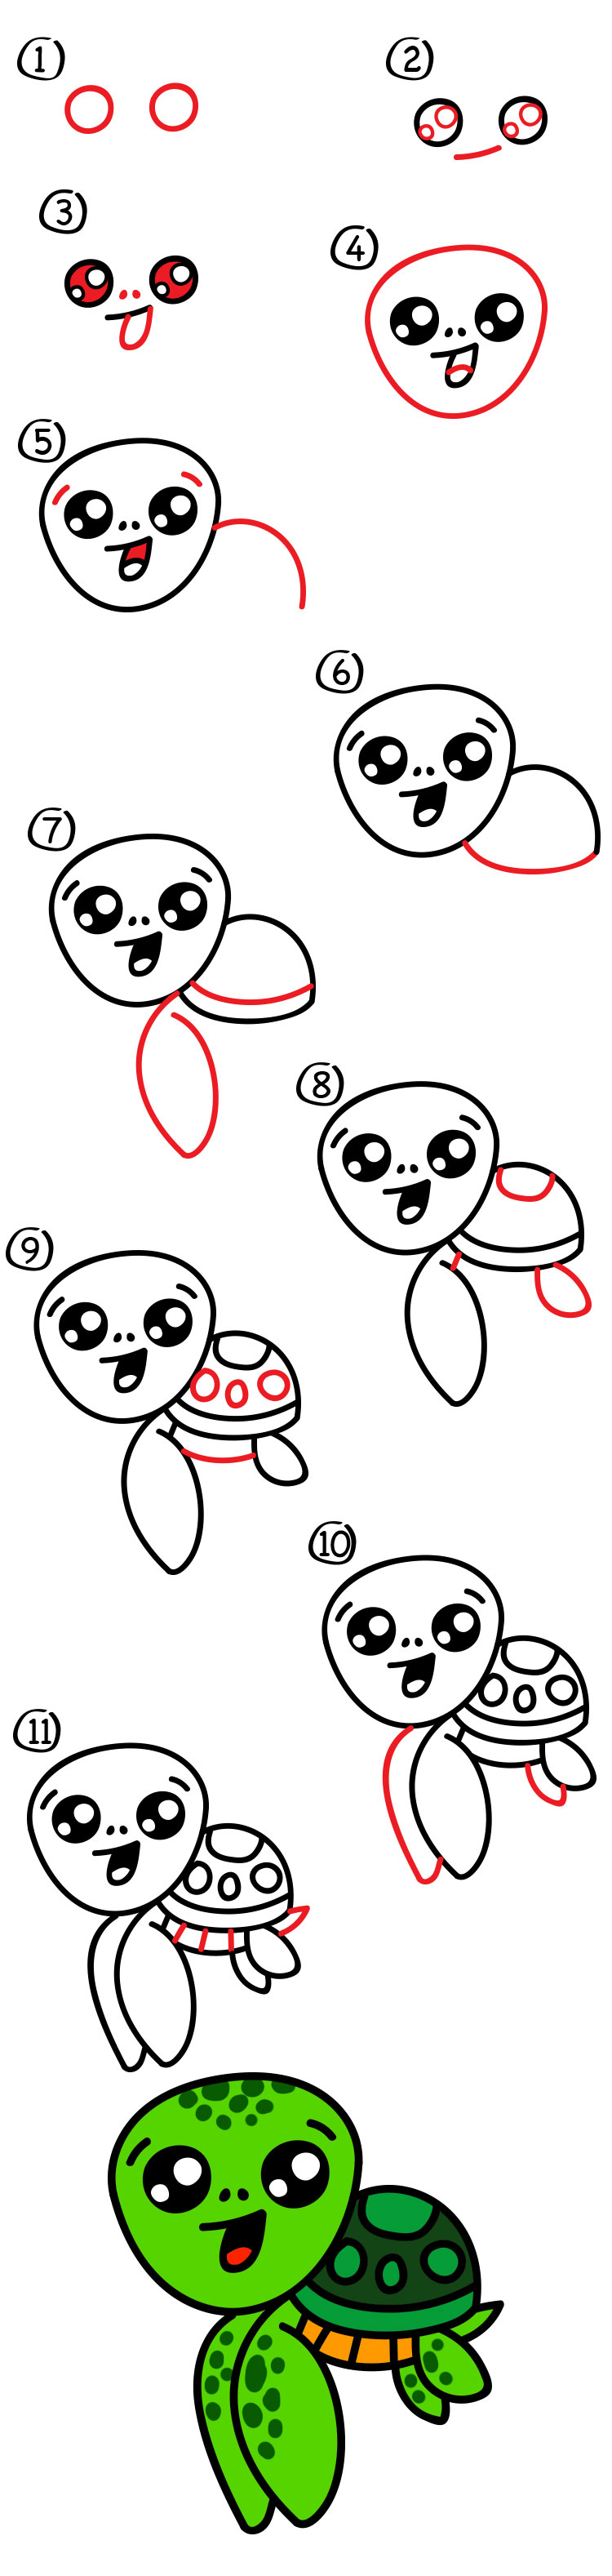 How To Draw A Cartoon Sea Turtle - Art For Kids Hub